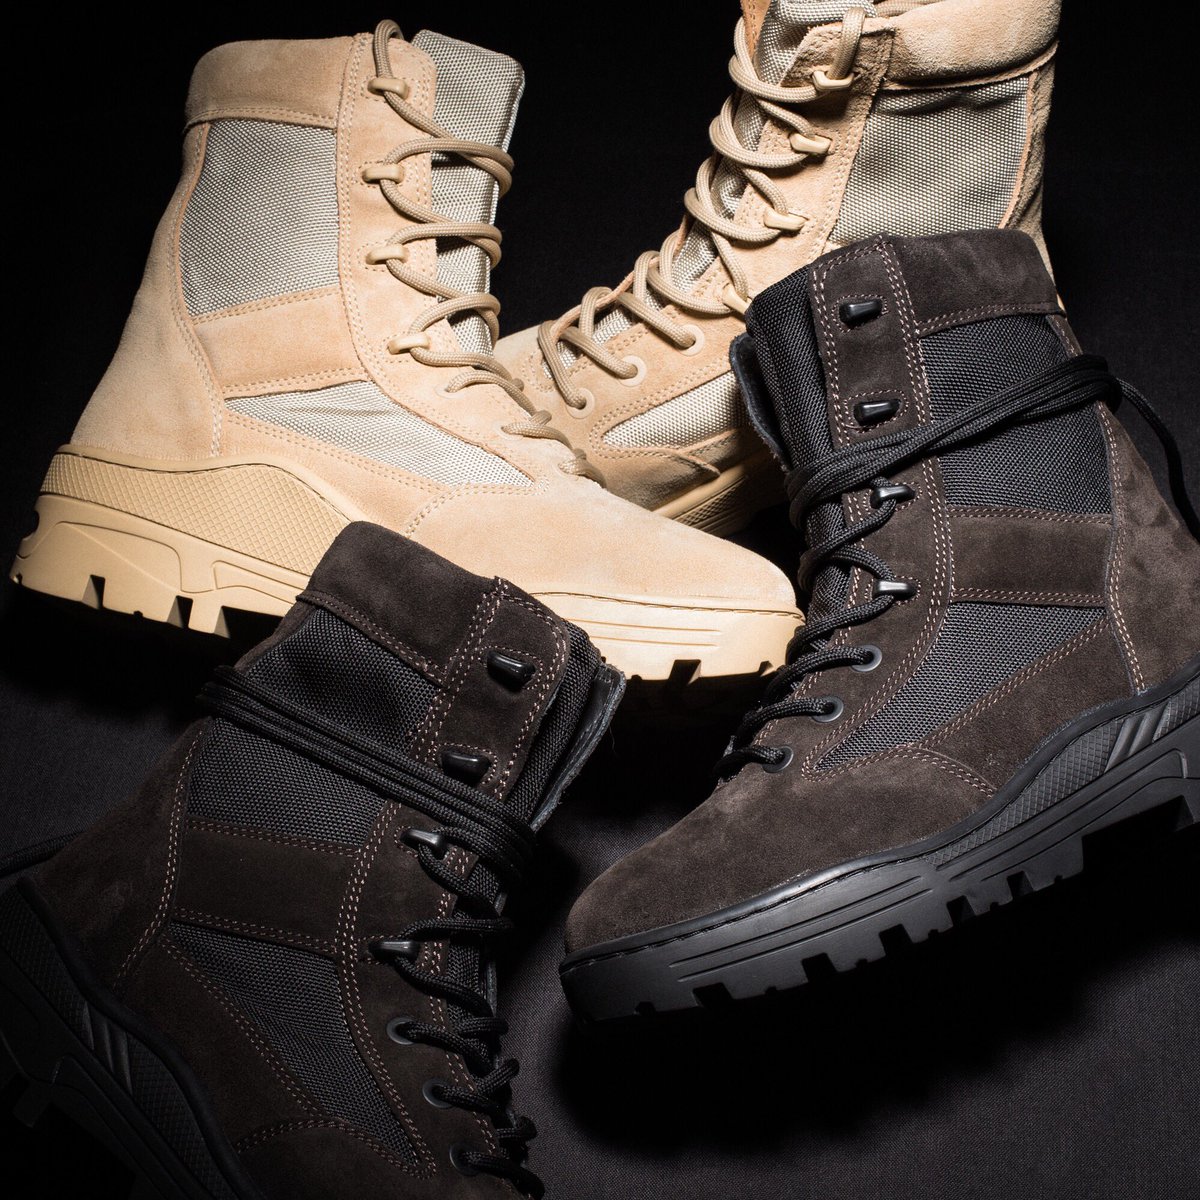 yeezy combat boots black